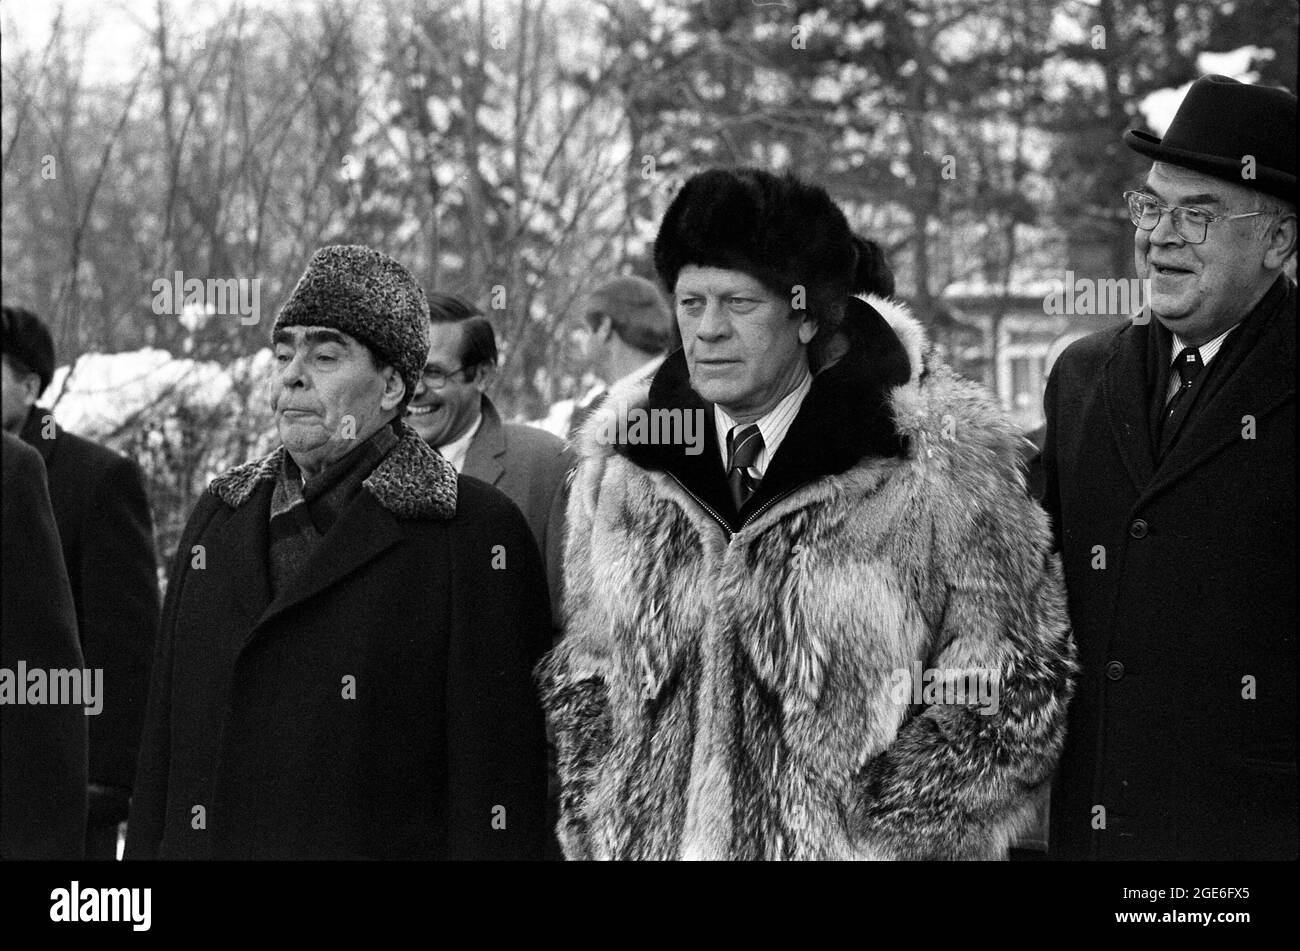 OKEANSKY, VLADIVOSTOK, RUSSIA - 24 November 1974 - US President Gerald Ford and General Secretary Leonid Brezhnev as the two world leaders depart Okea Stock Photo